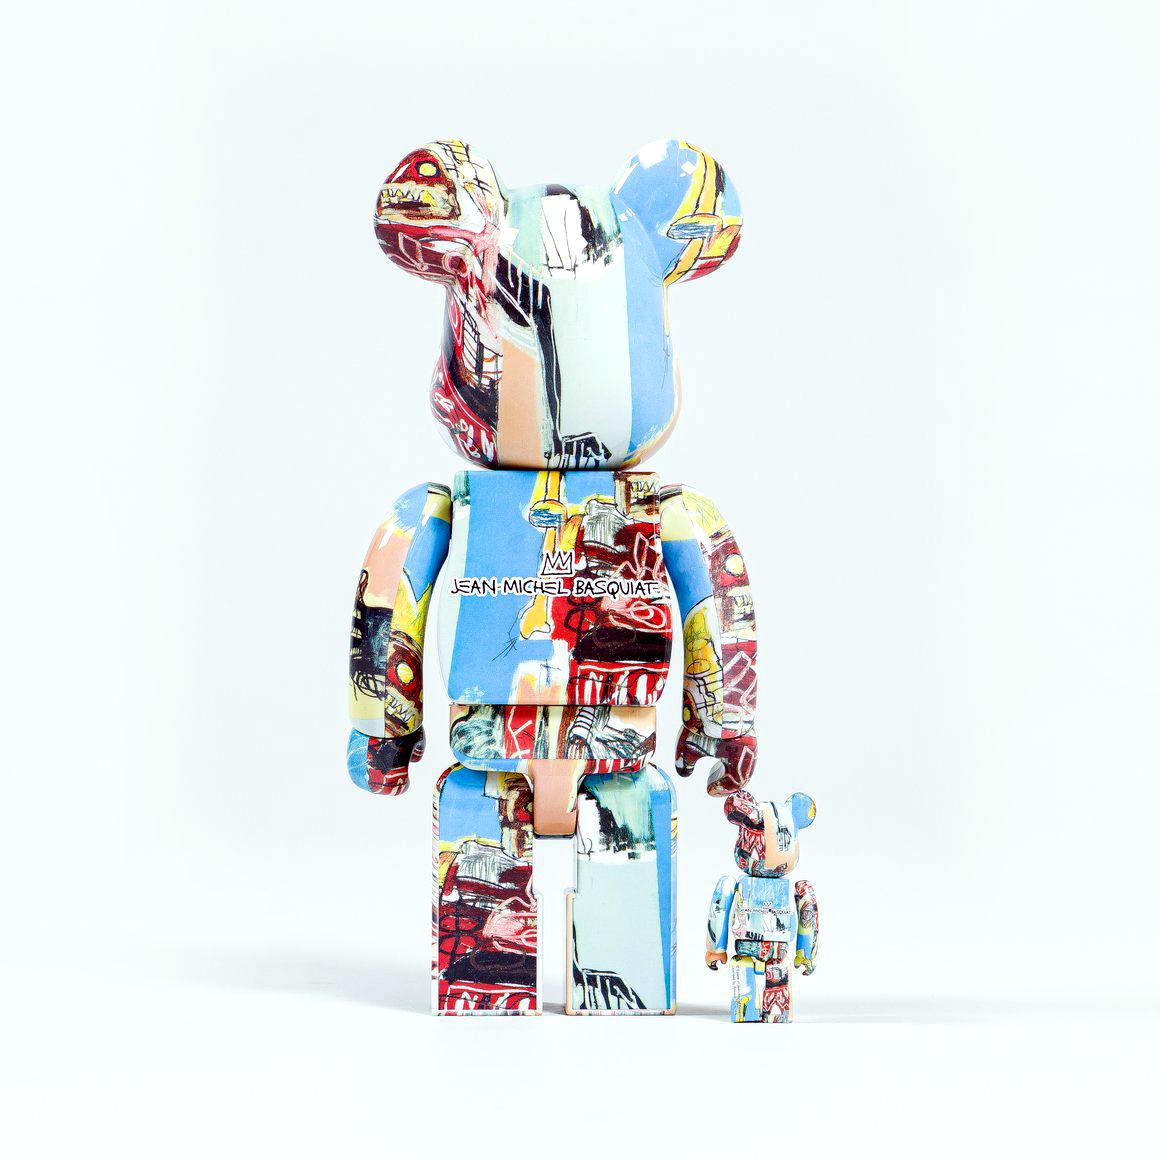 BEARBRICK JEAN-MICHEL BASQUIAT 400% &100% Medicom Toy Japan Vinyl figure POP ART - Sculpture by after Jean-Michel Basquiat